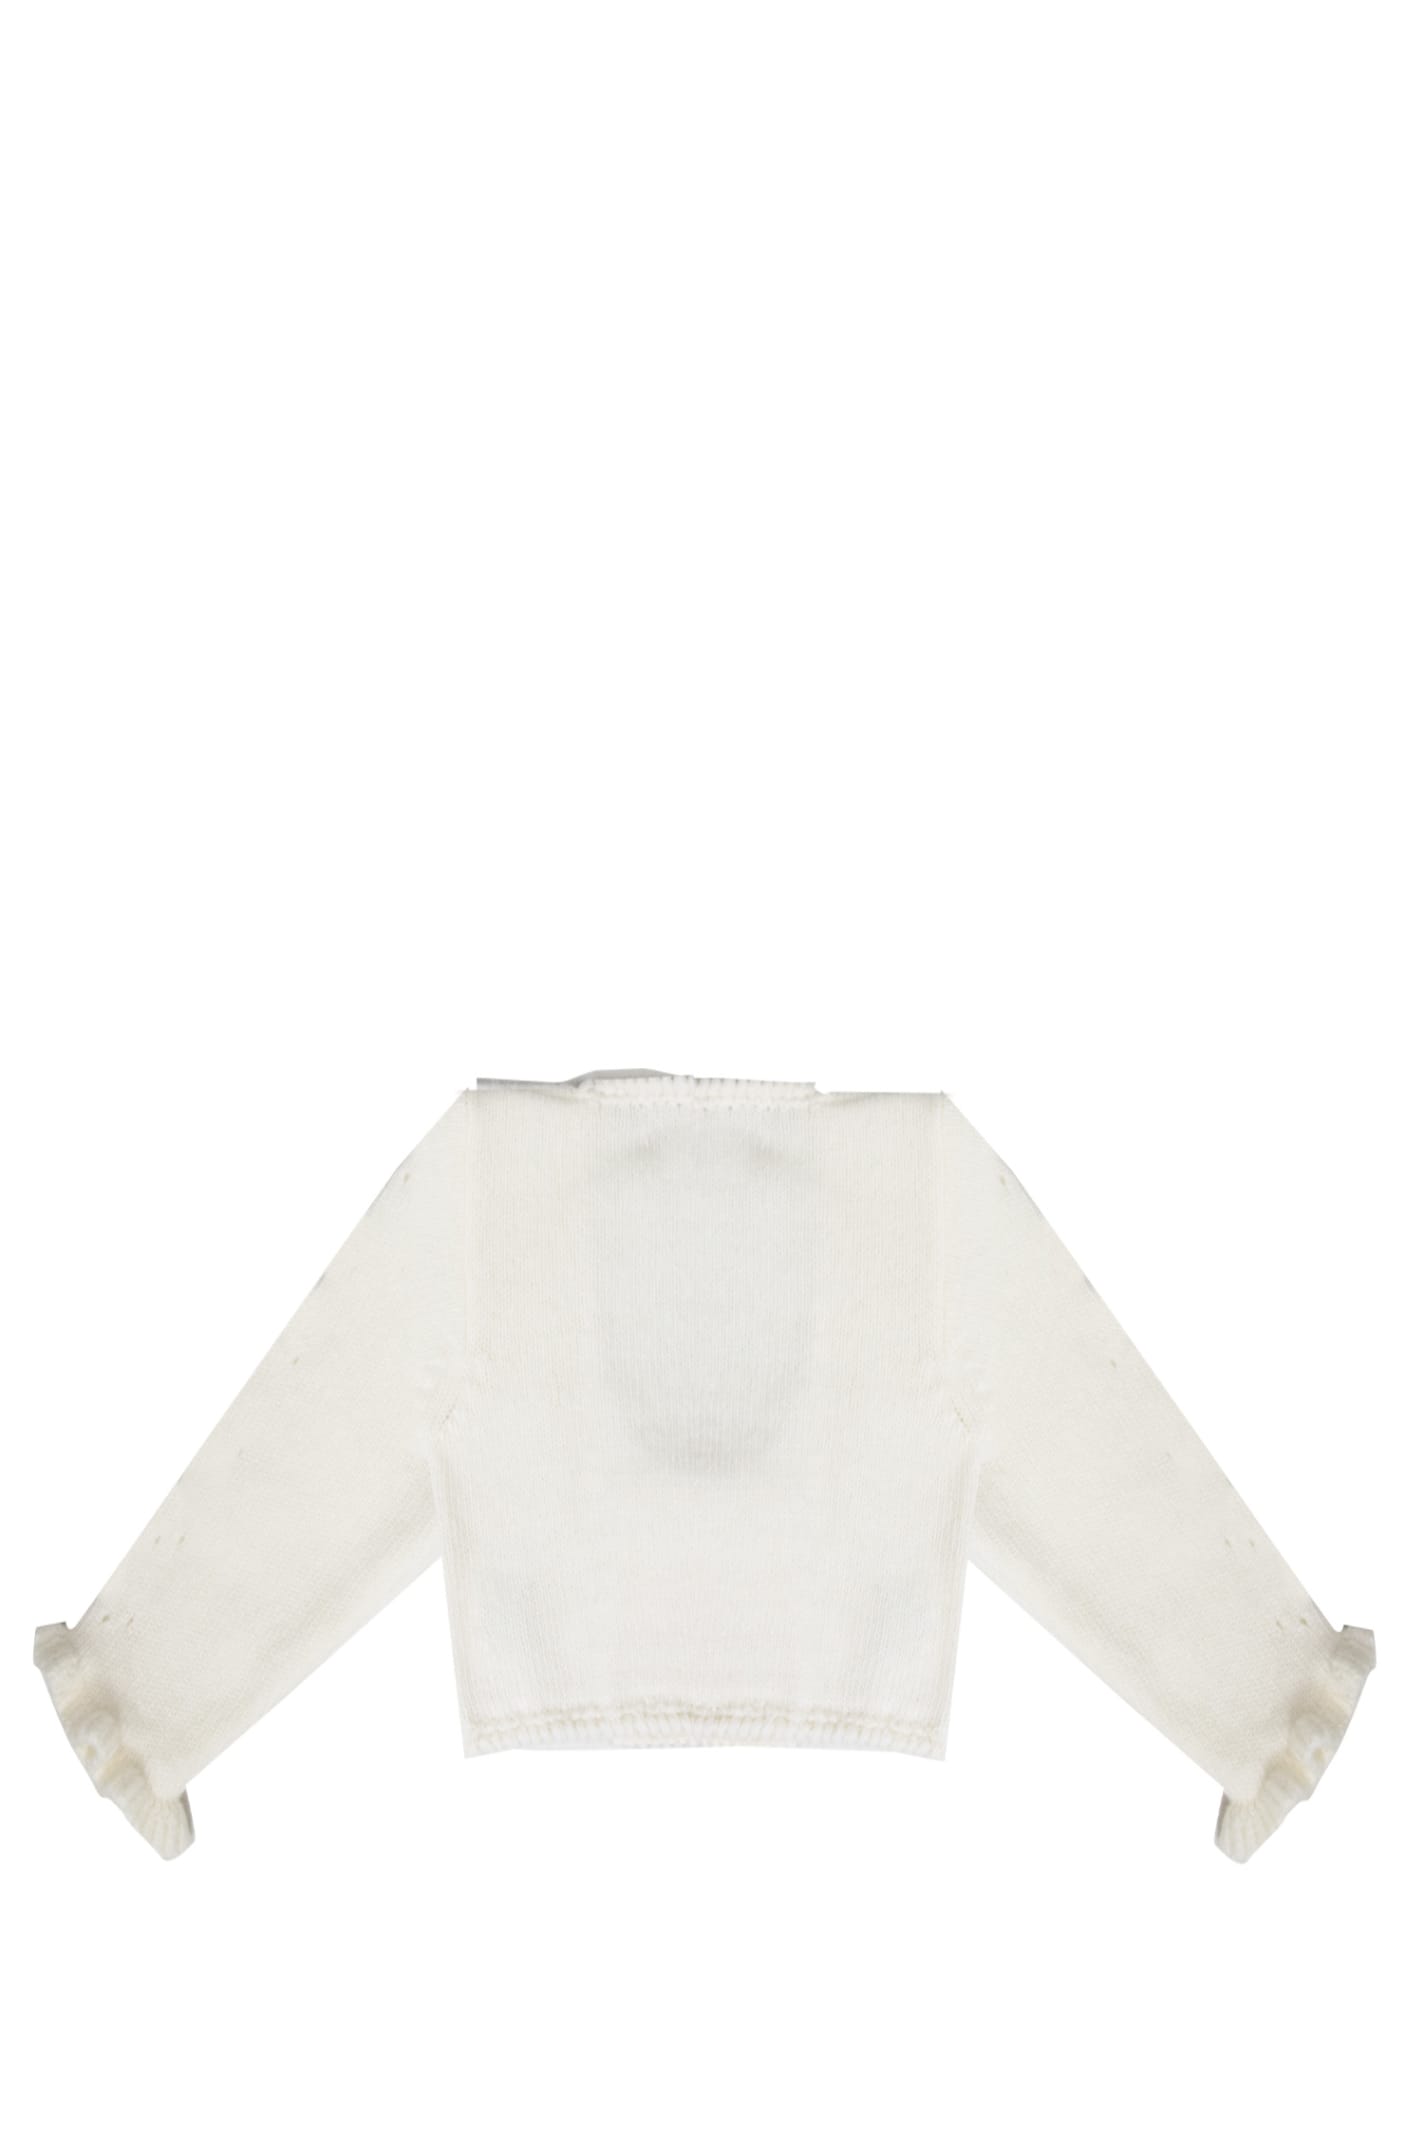 Shop La Stupenderia Wool Sweater